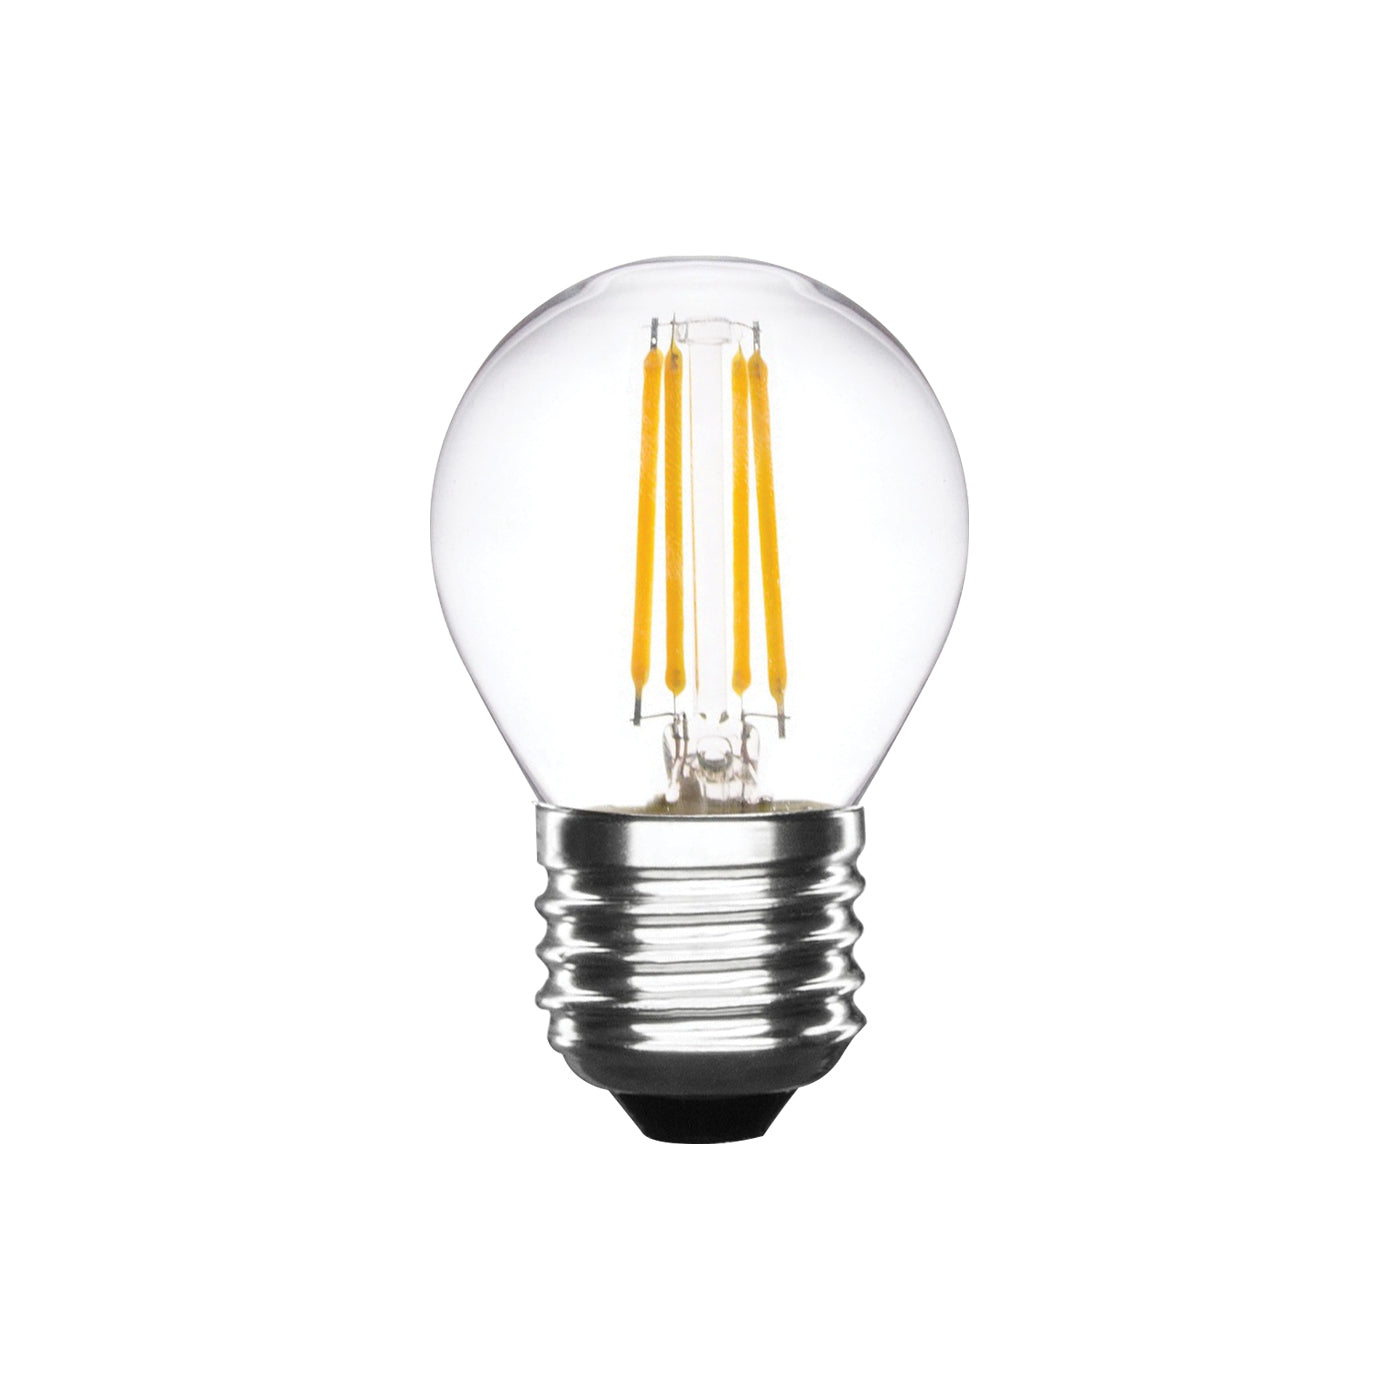 Alcapower Lampadina LED, mini sfera con filamento LED, 4W a luce calda 2700K, classe energetica A++